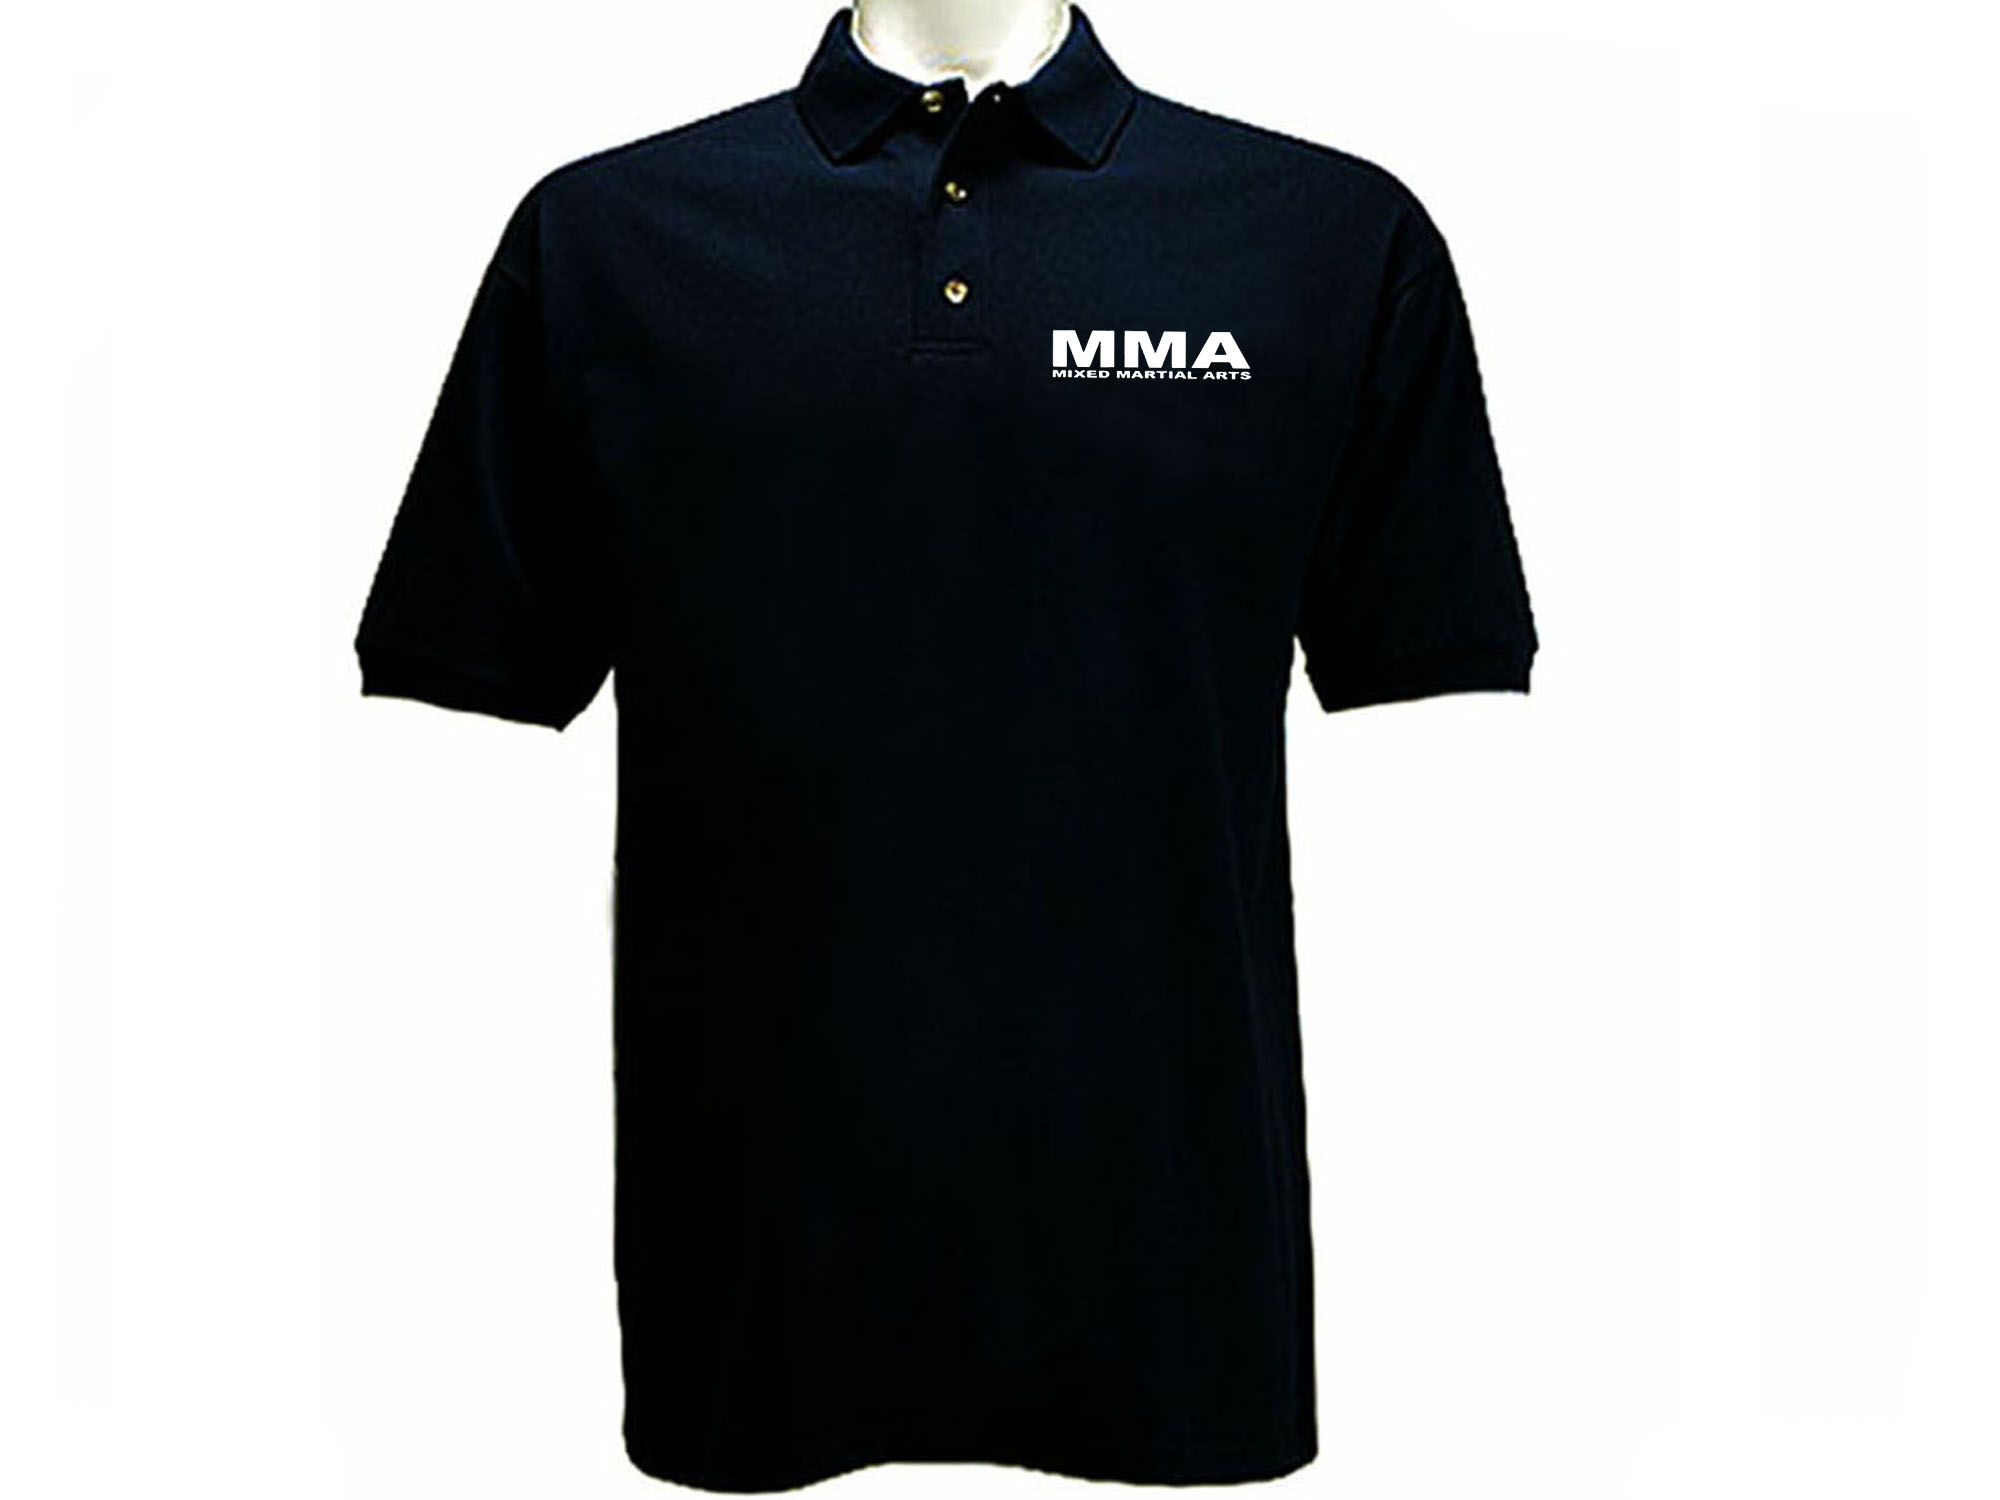 MMA mixed martial arts polo style t-shirt